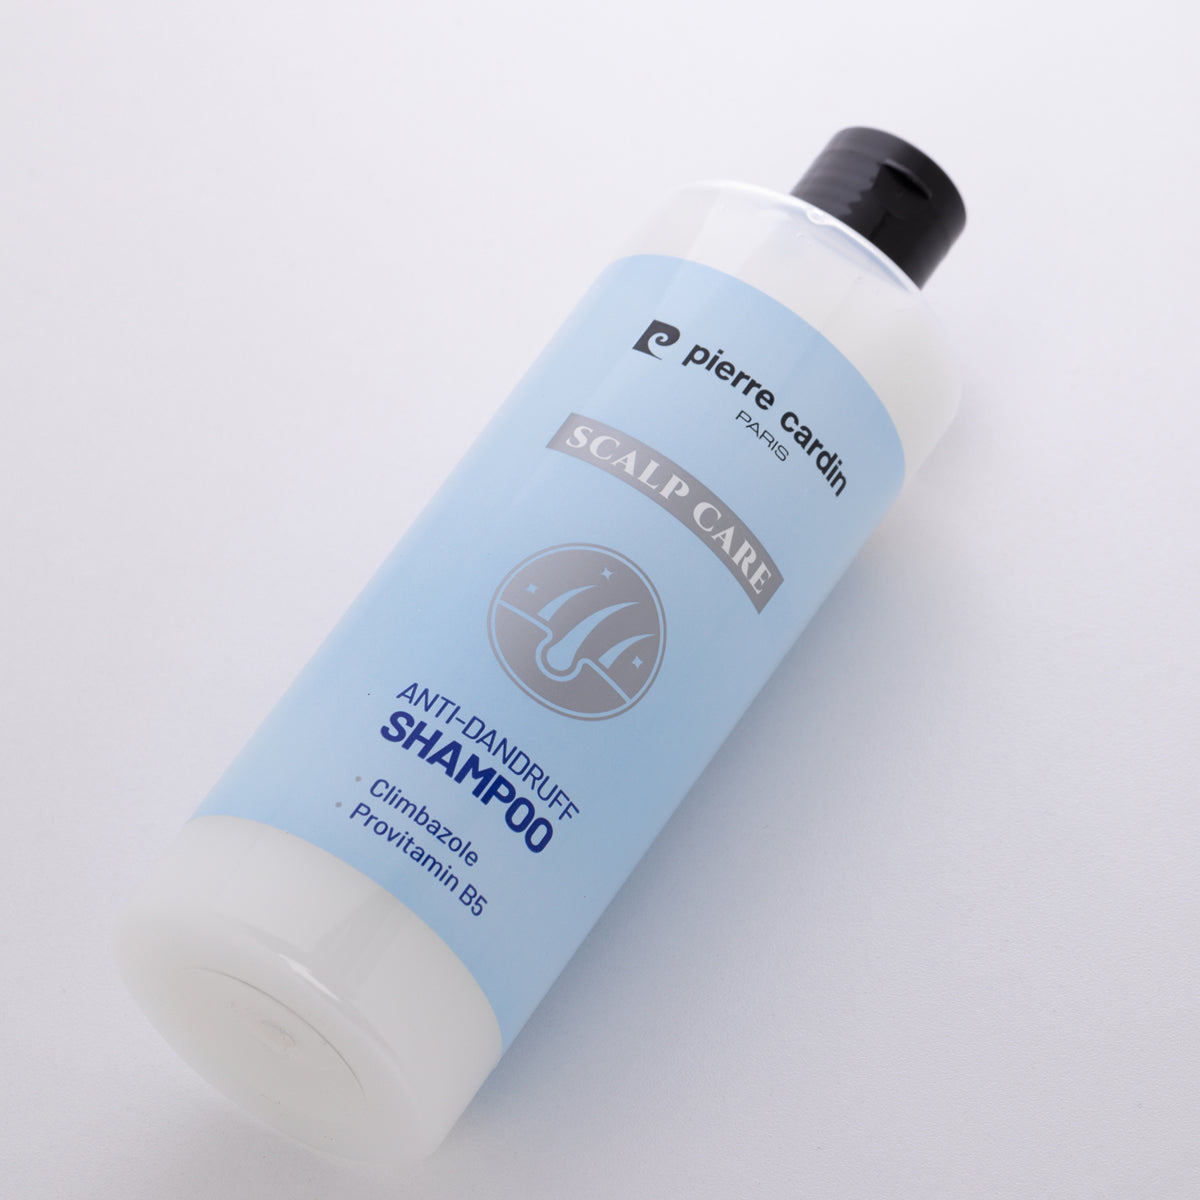 Pierre Cardin | Shampoo |  Anti-Dandruff | 400 ml